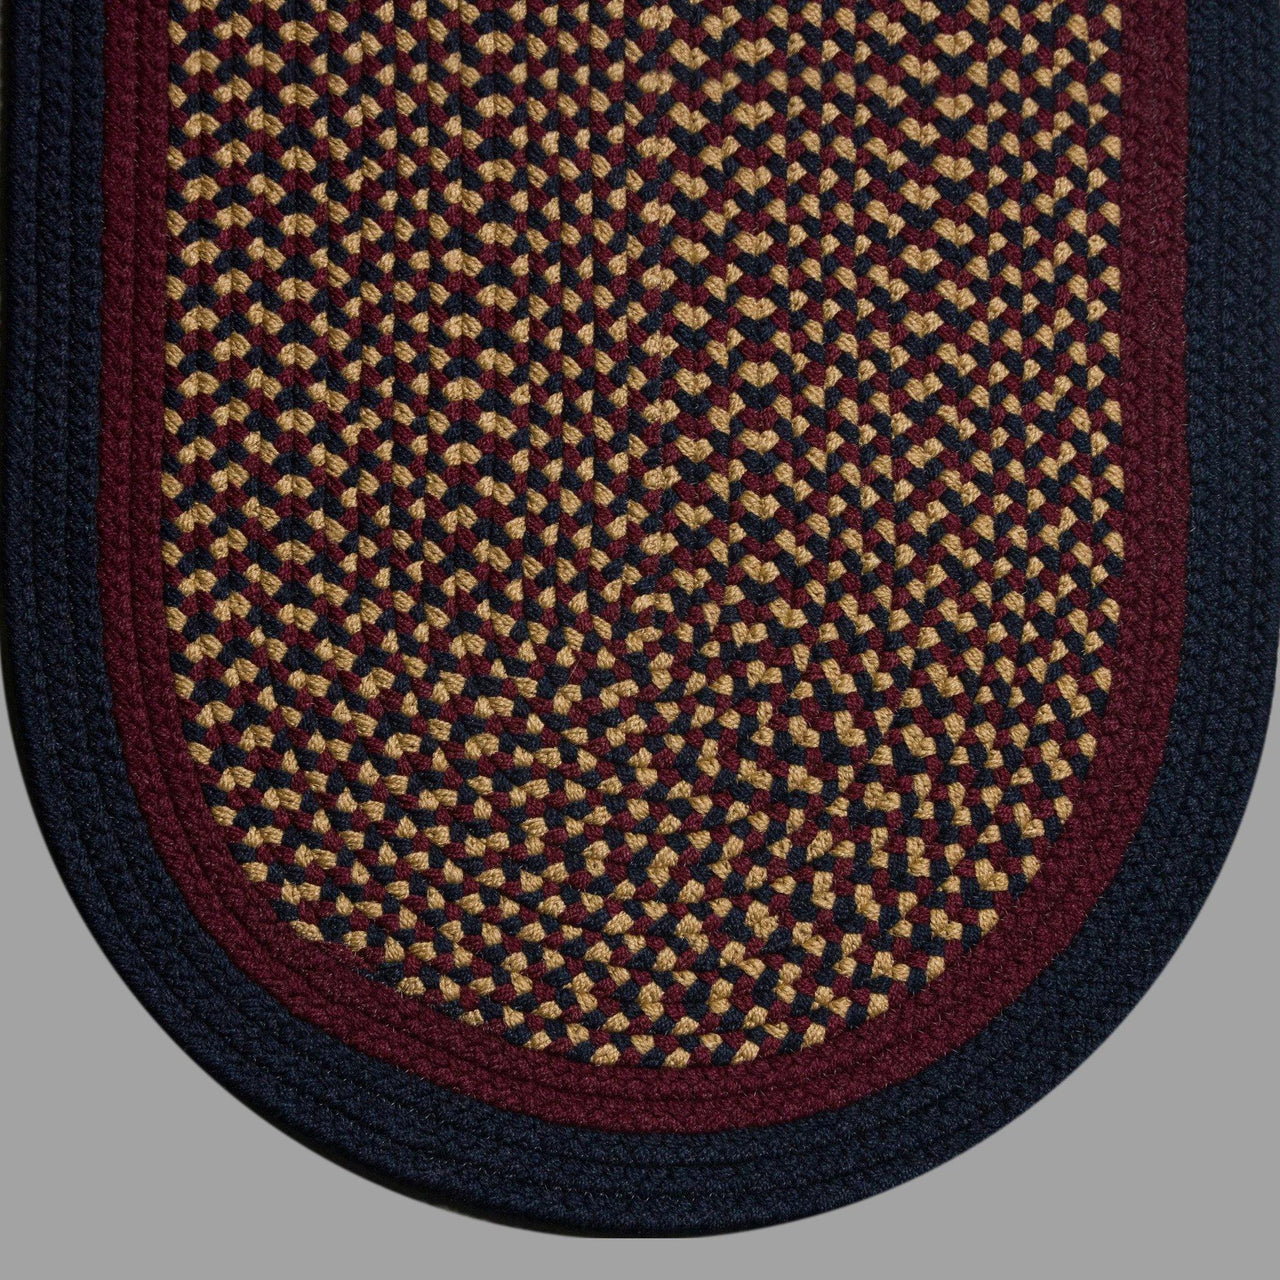 311/136/111 OB Style Braided Rugs - The Fox Decor